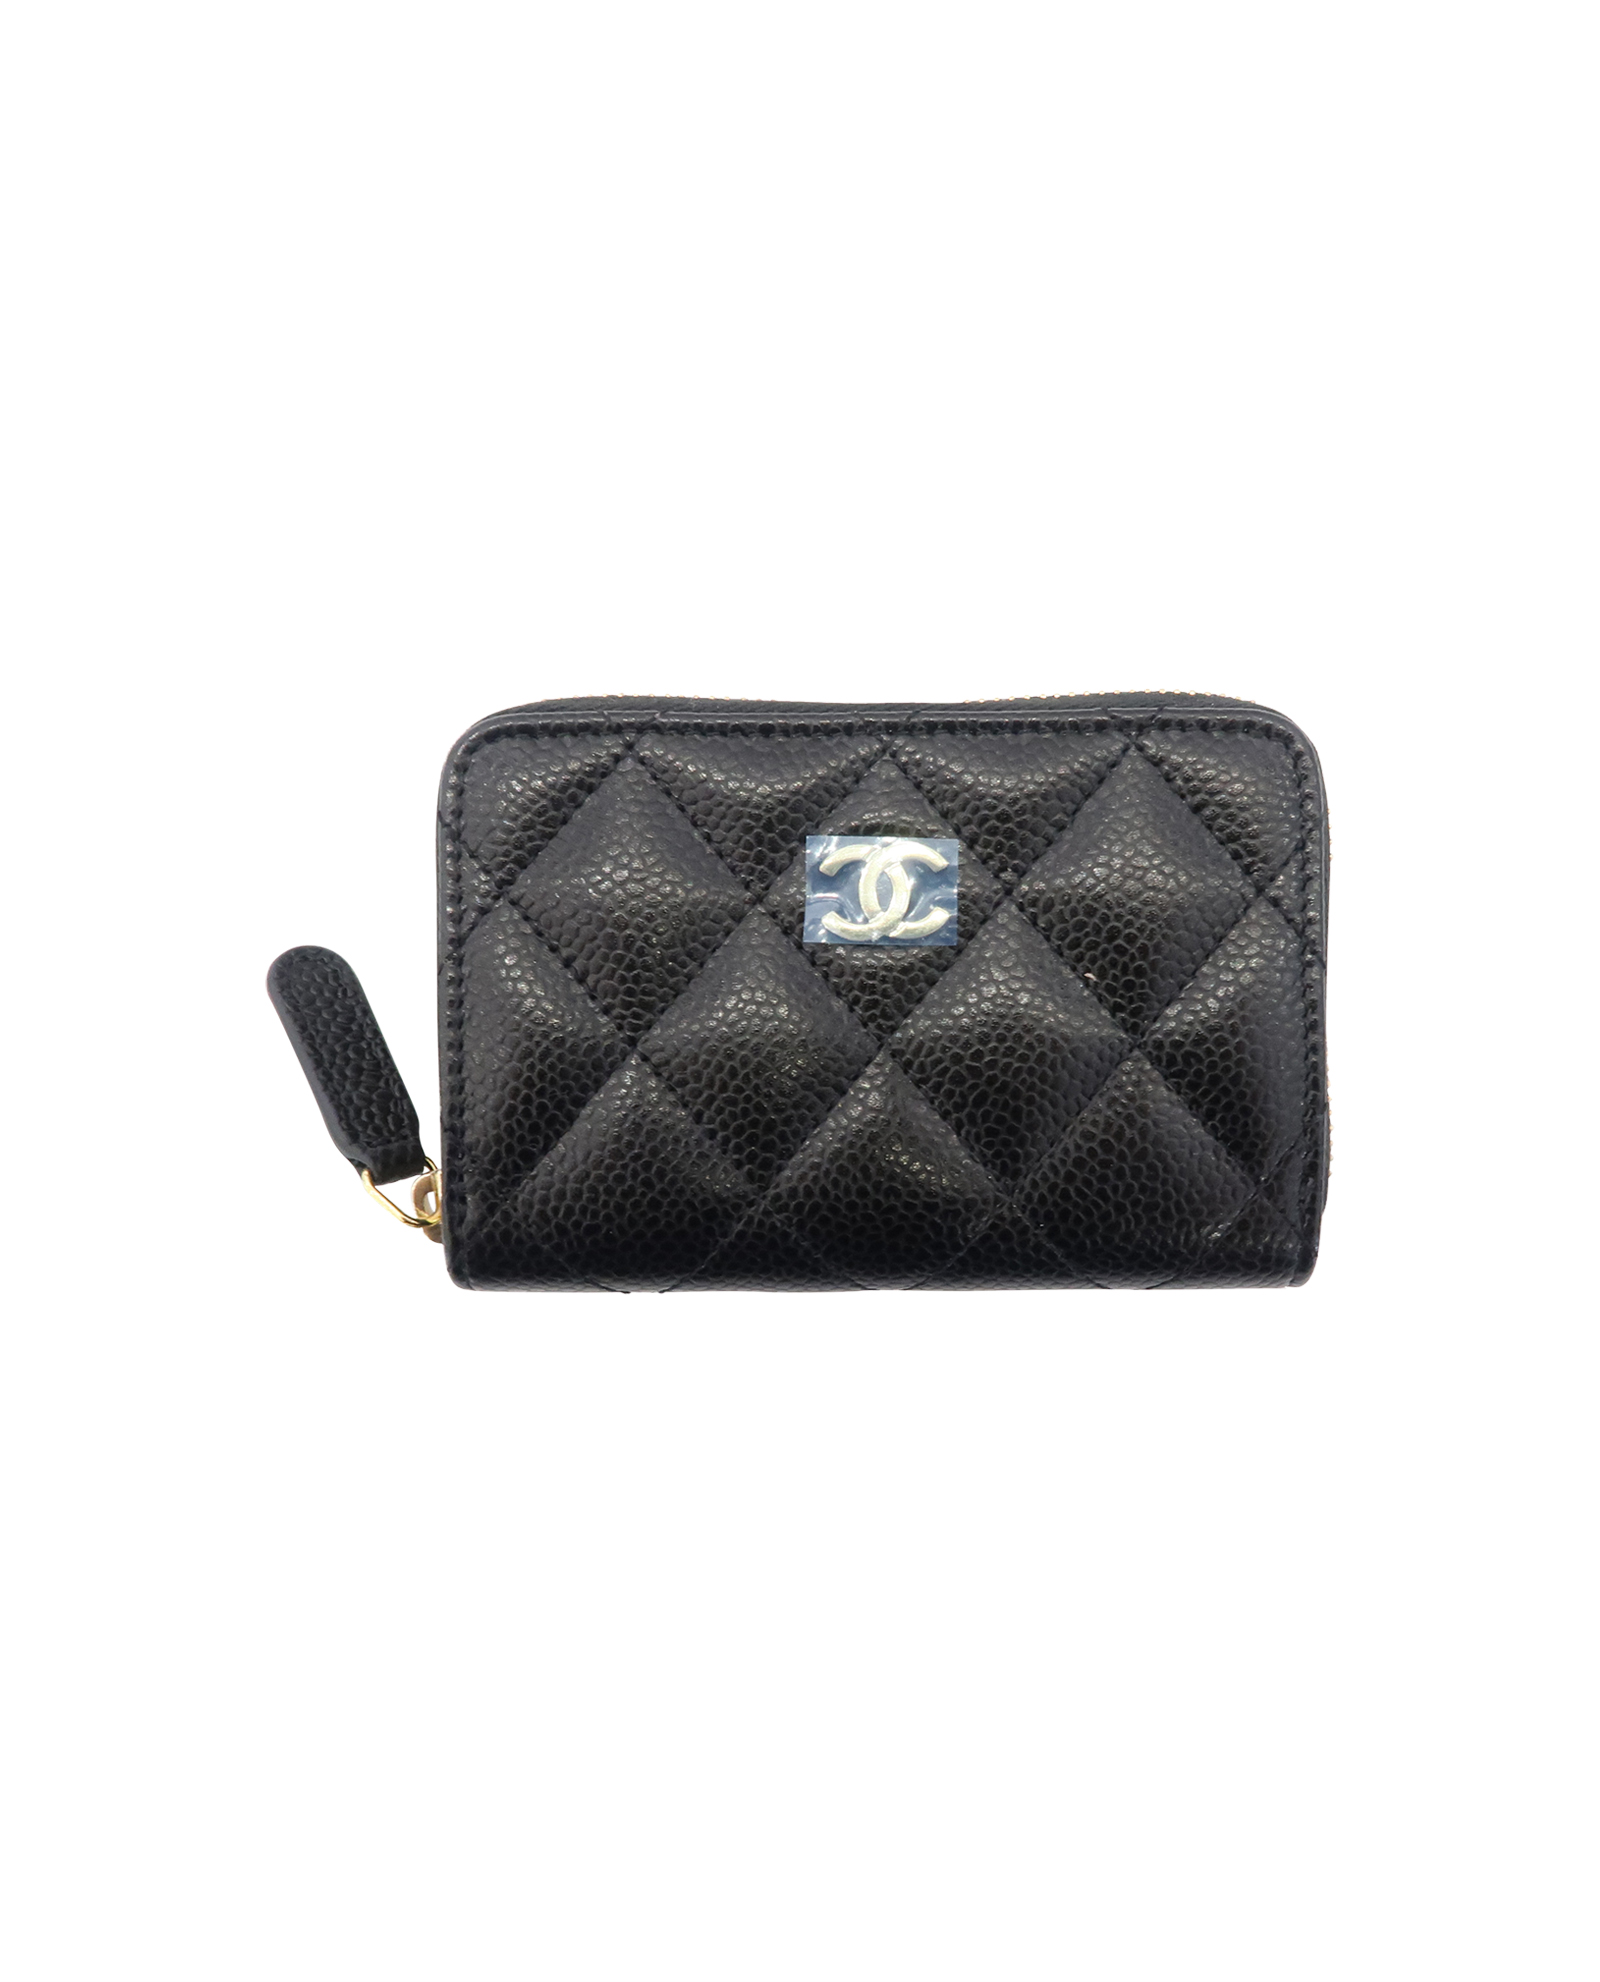 Buy [New article] Chanel coin case coin purse round zipper coin